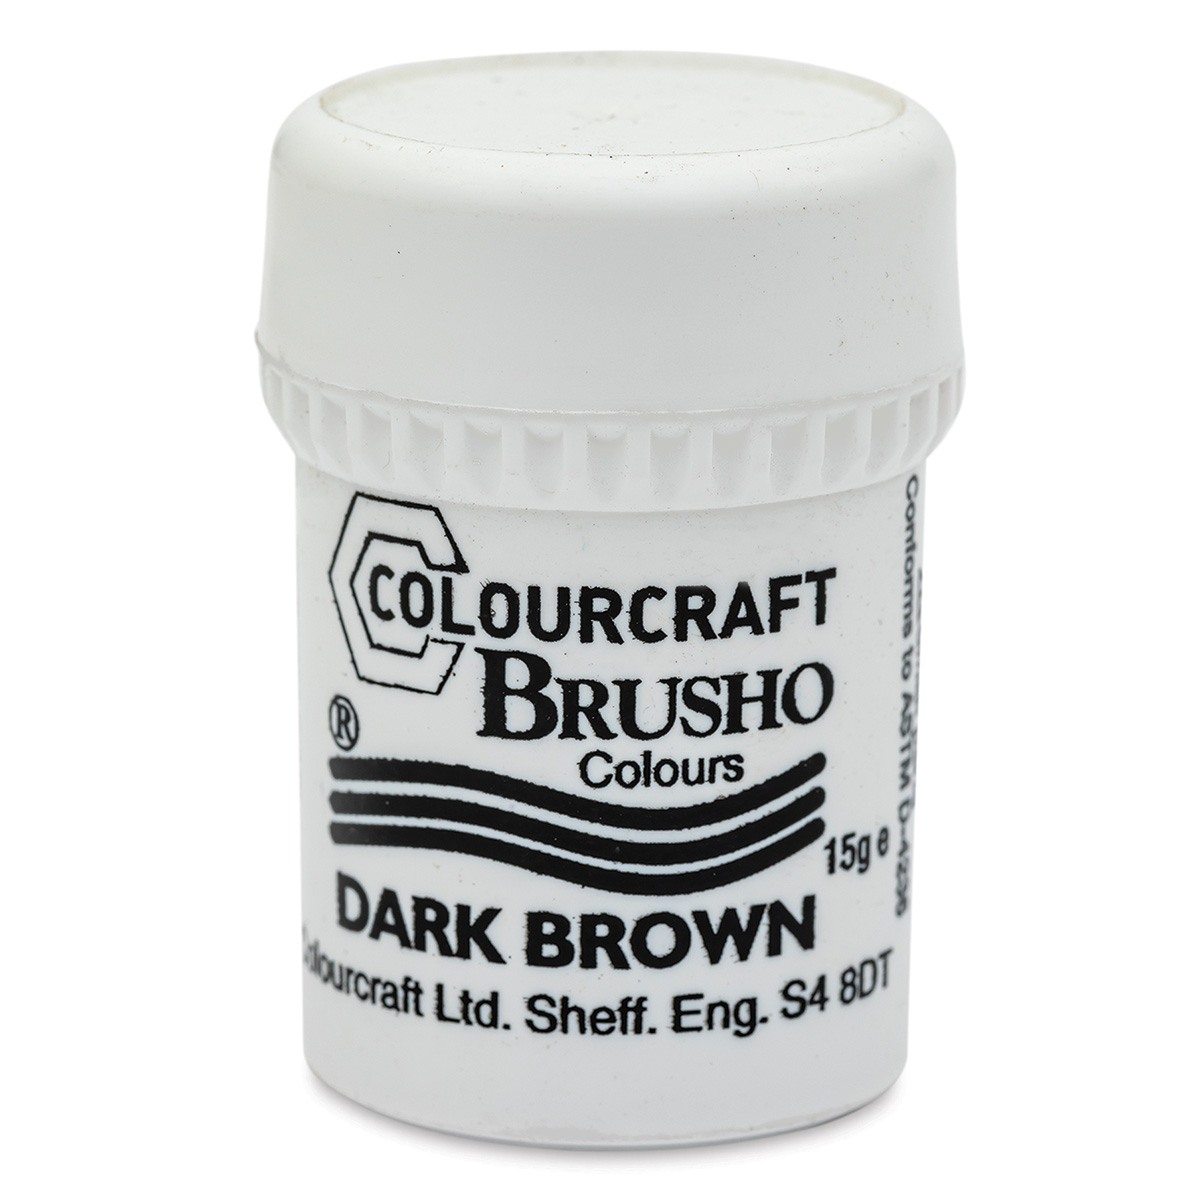 Brusho Crystal Colour - Dark Brown, 15 g pot